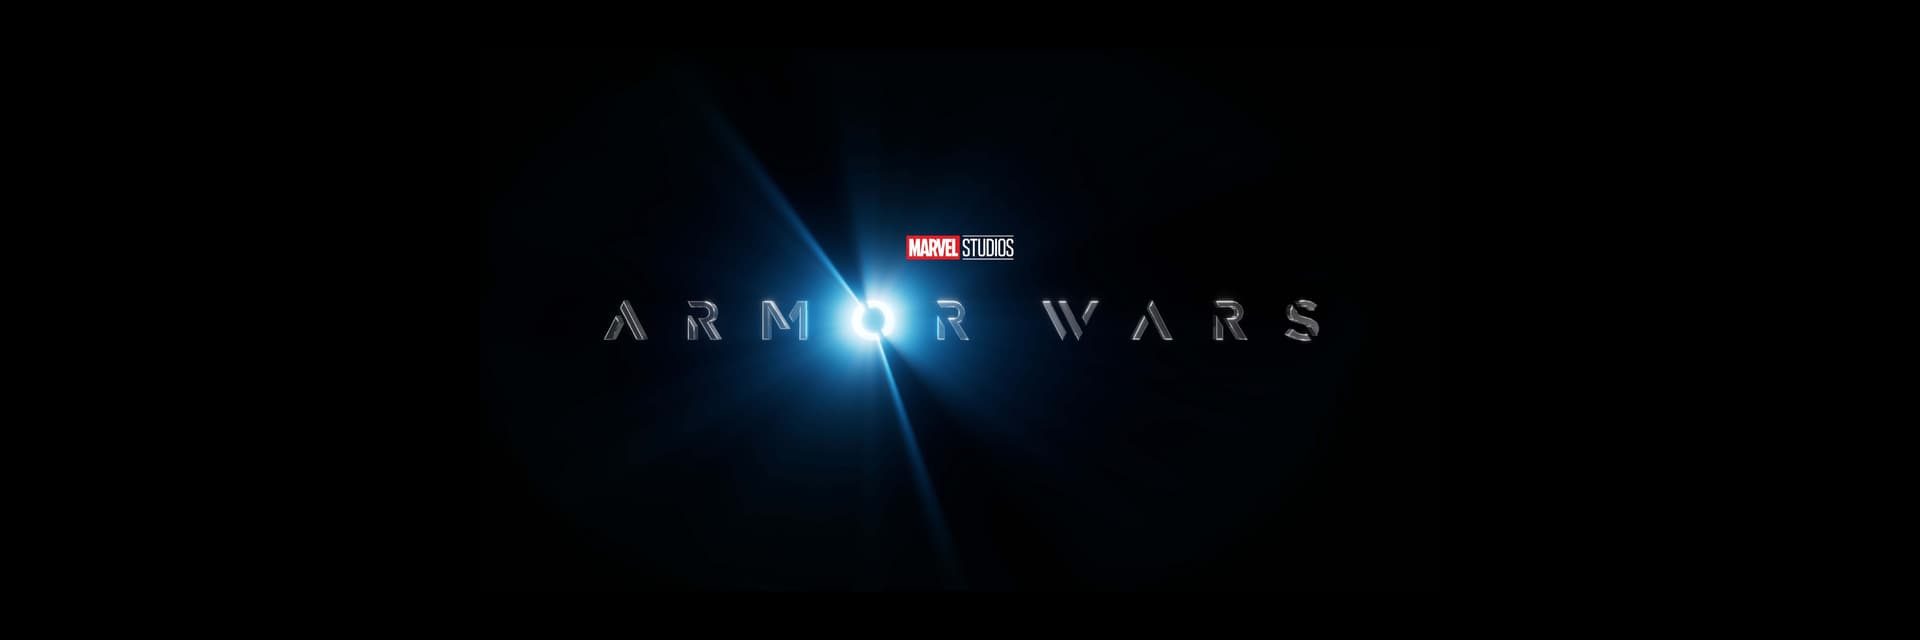 Marvel Studios' Armor Wars Movie Poster Logo on Black